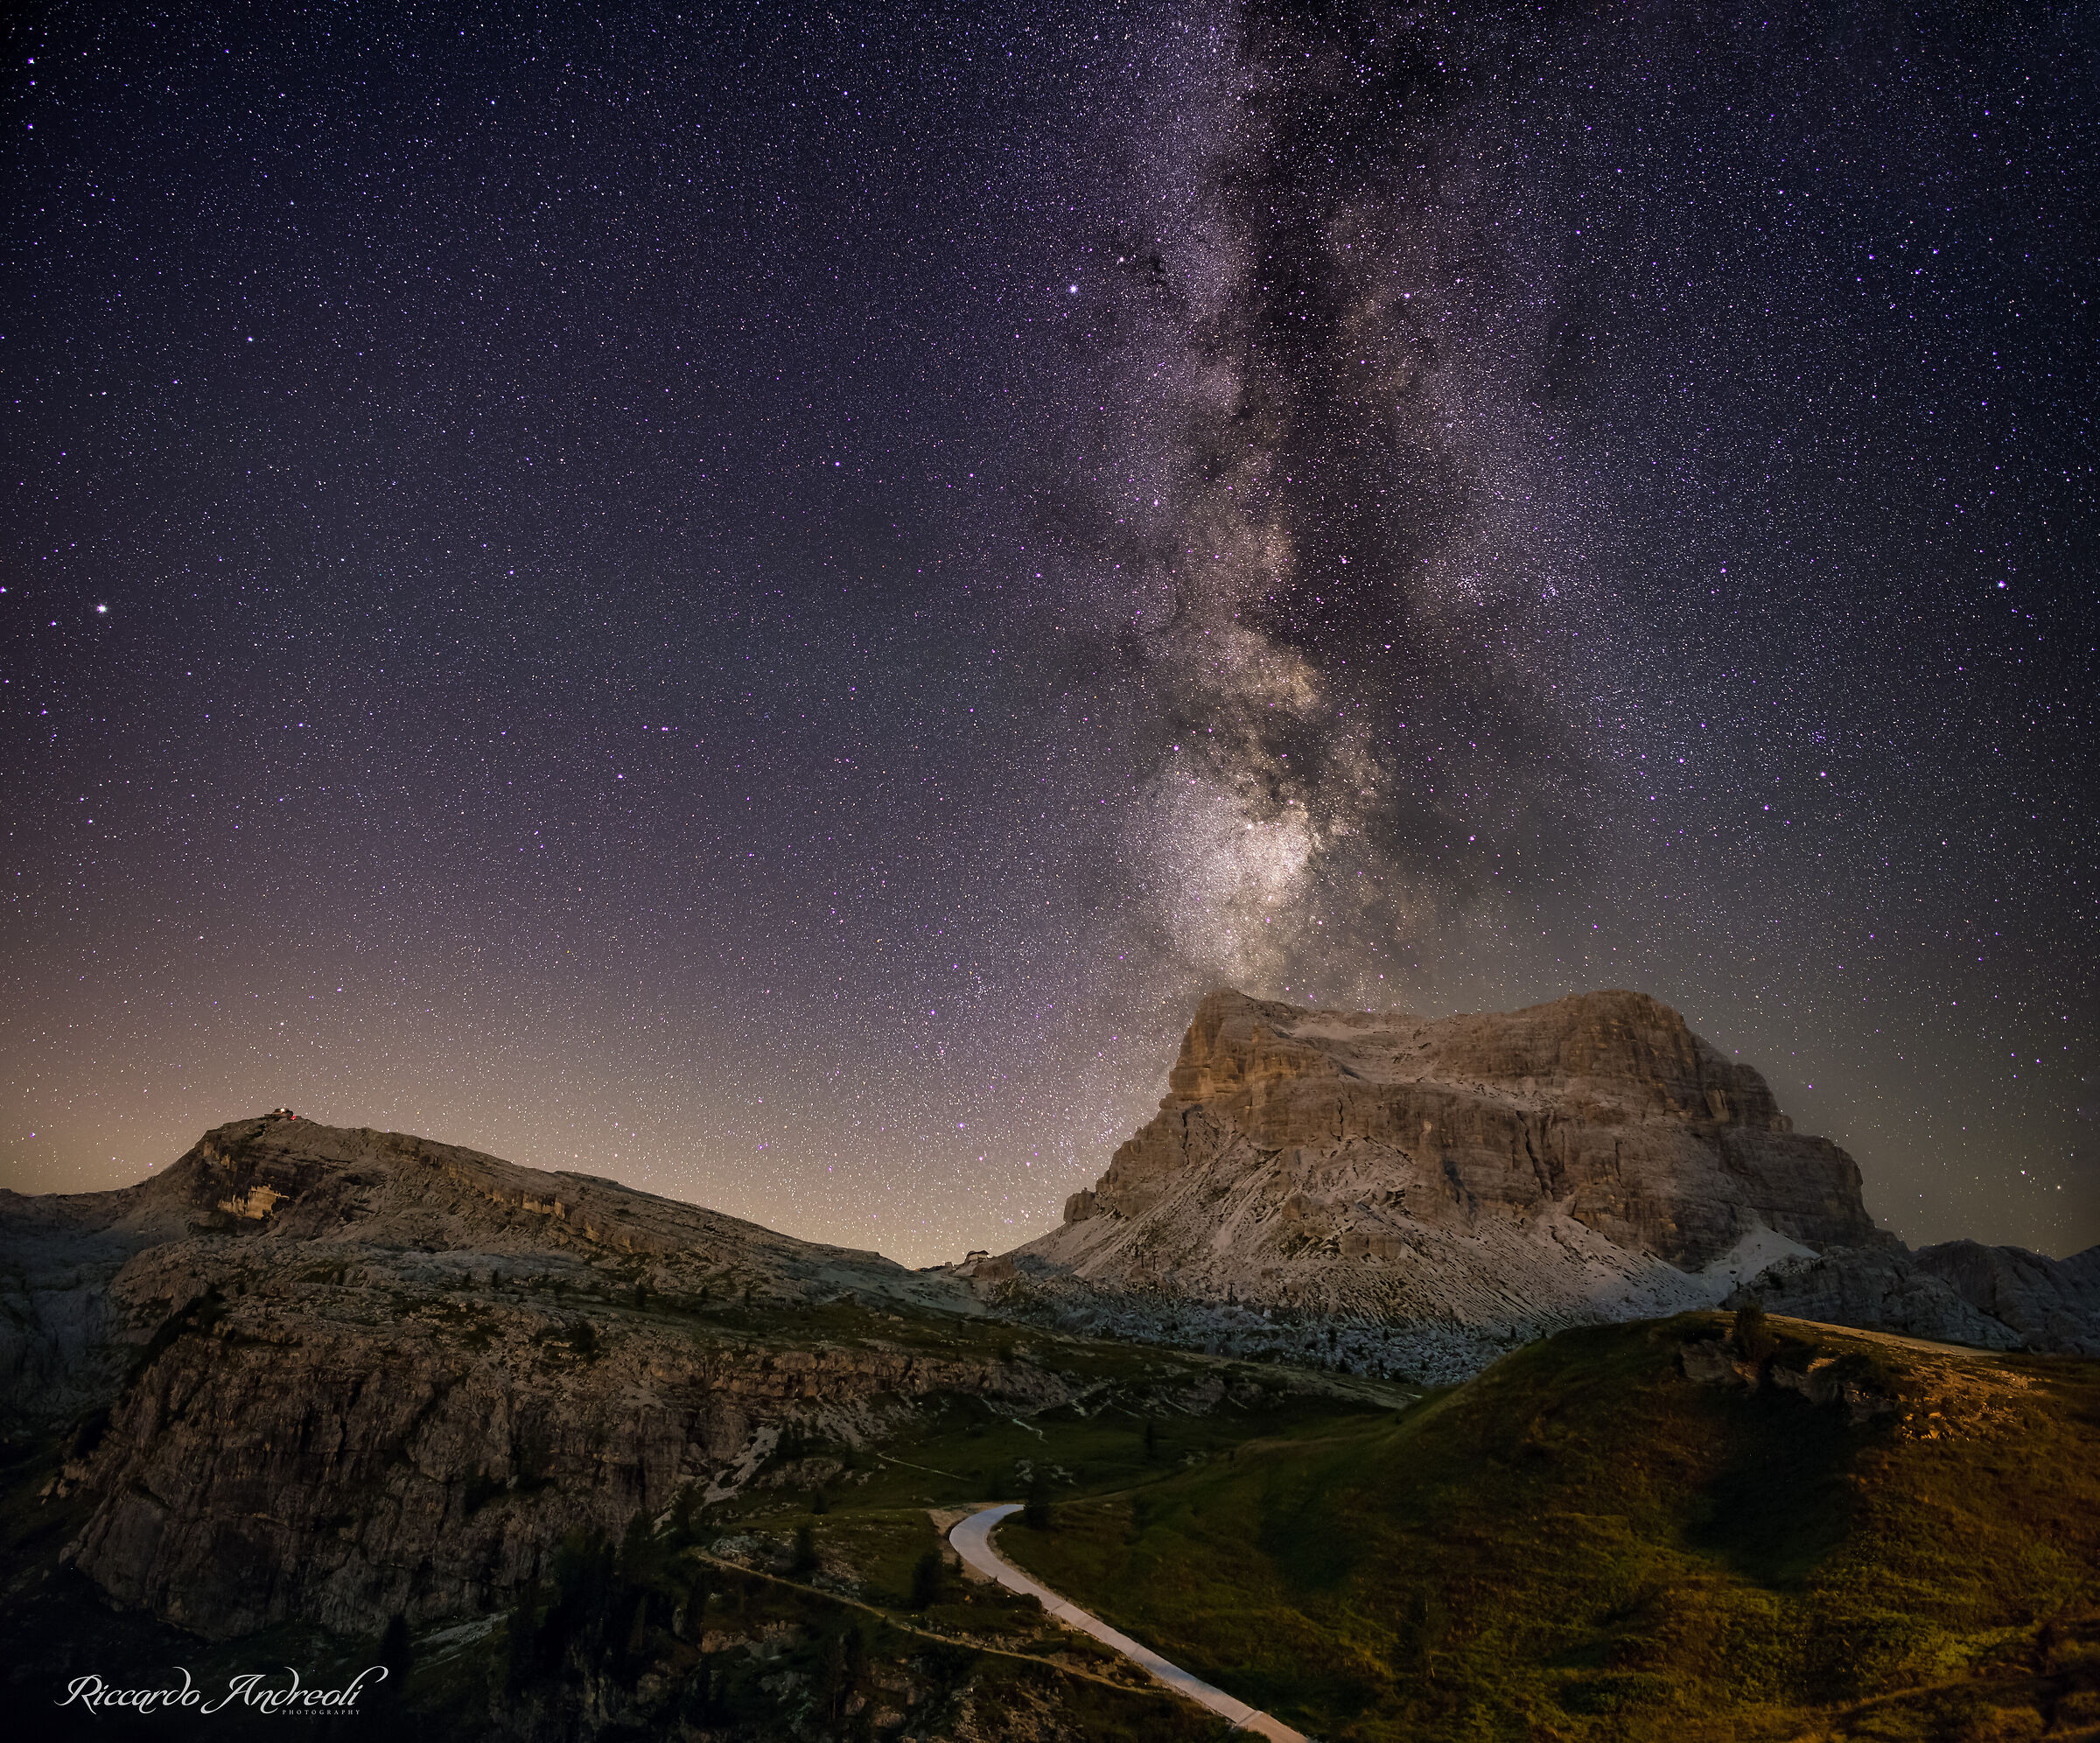 Nuvolau and Averau, August Milky Way...